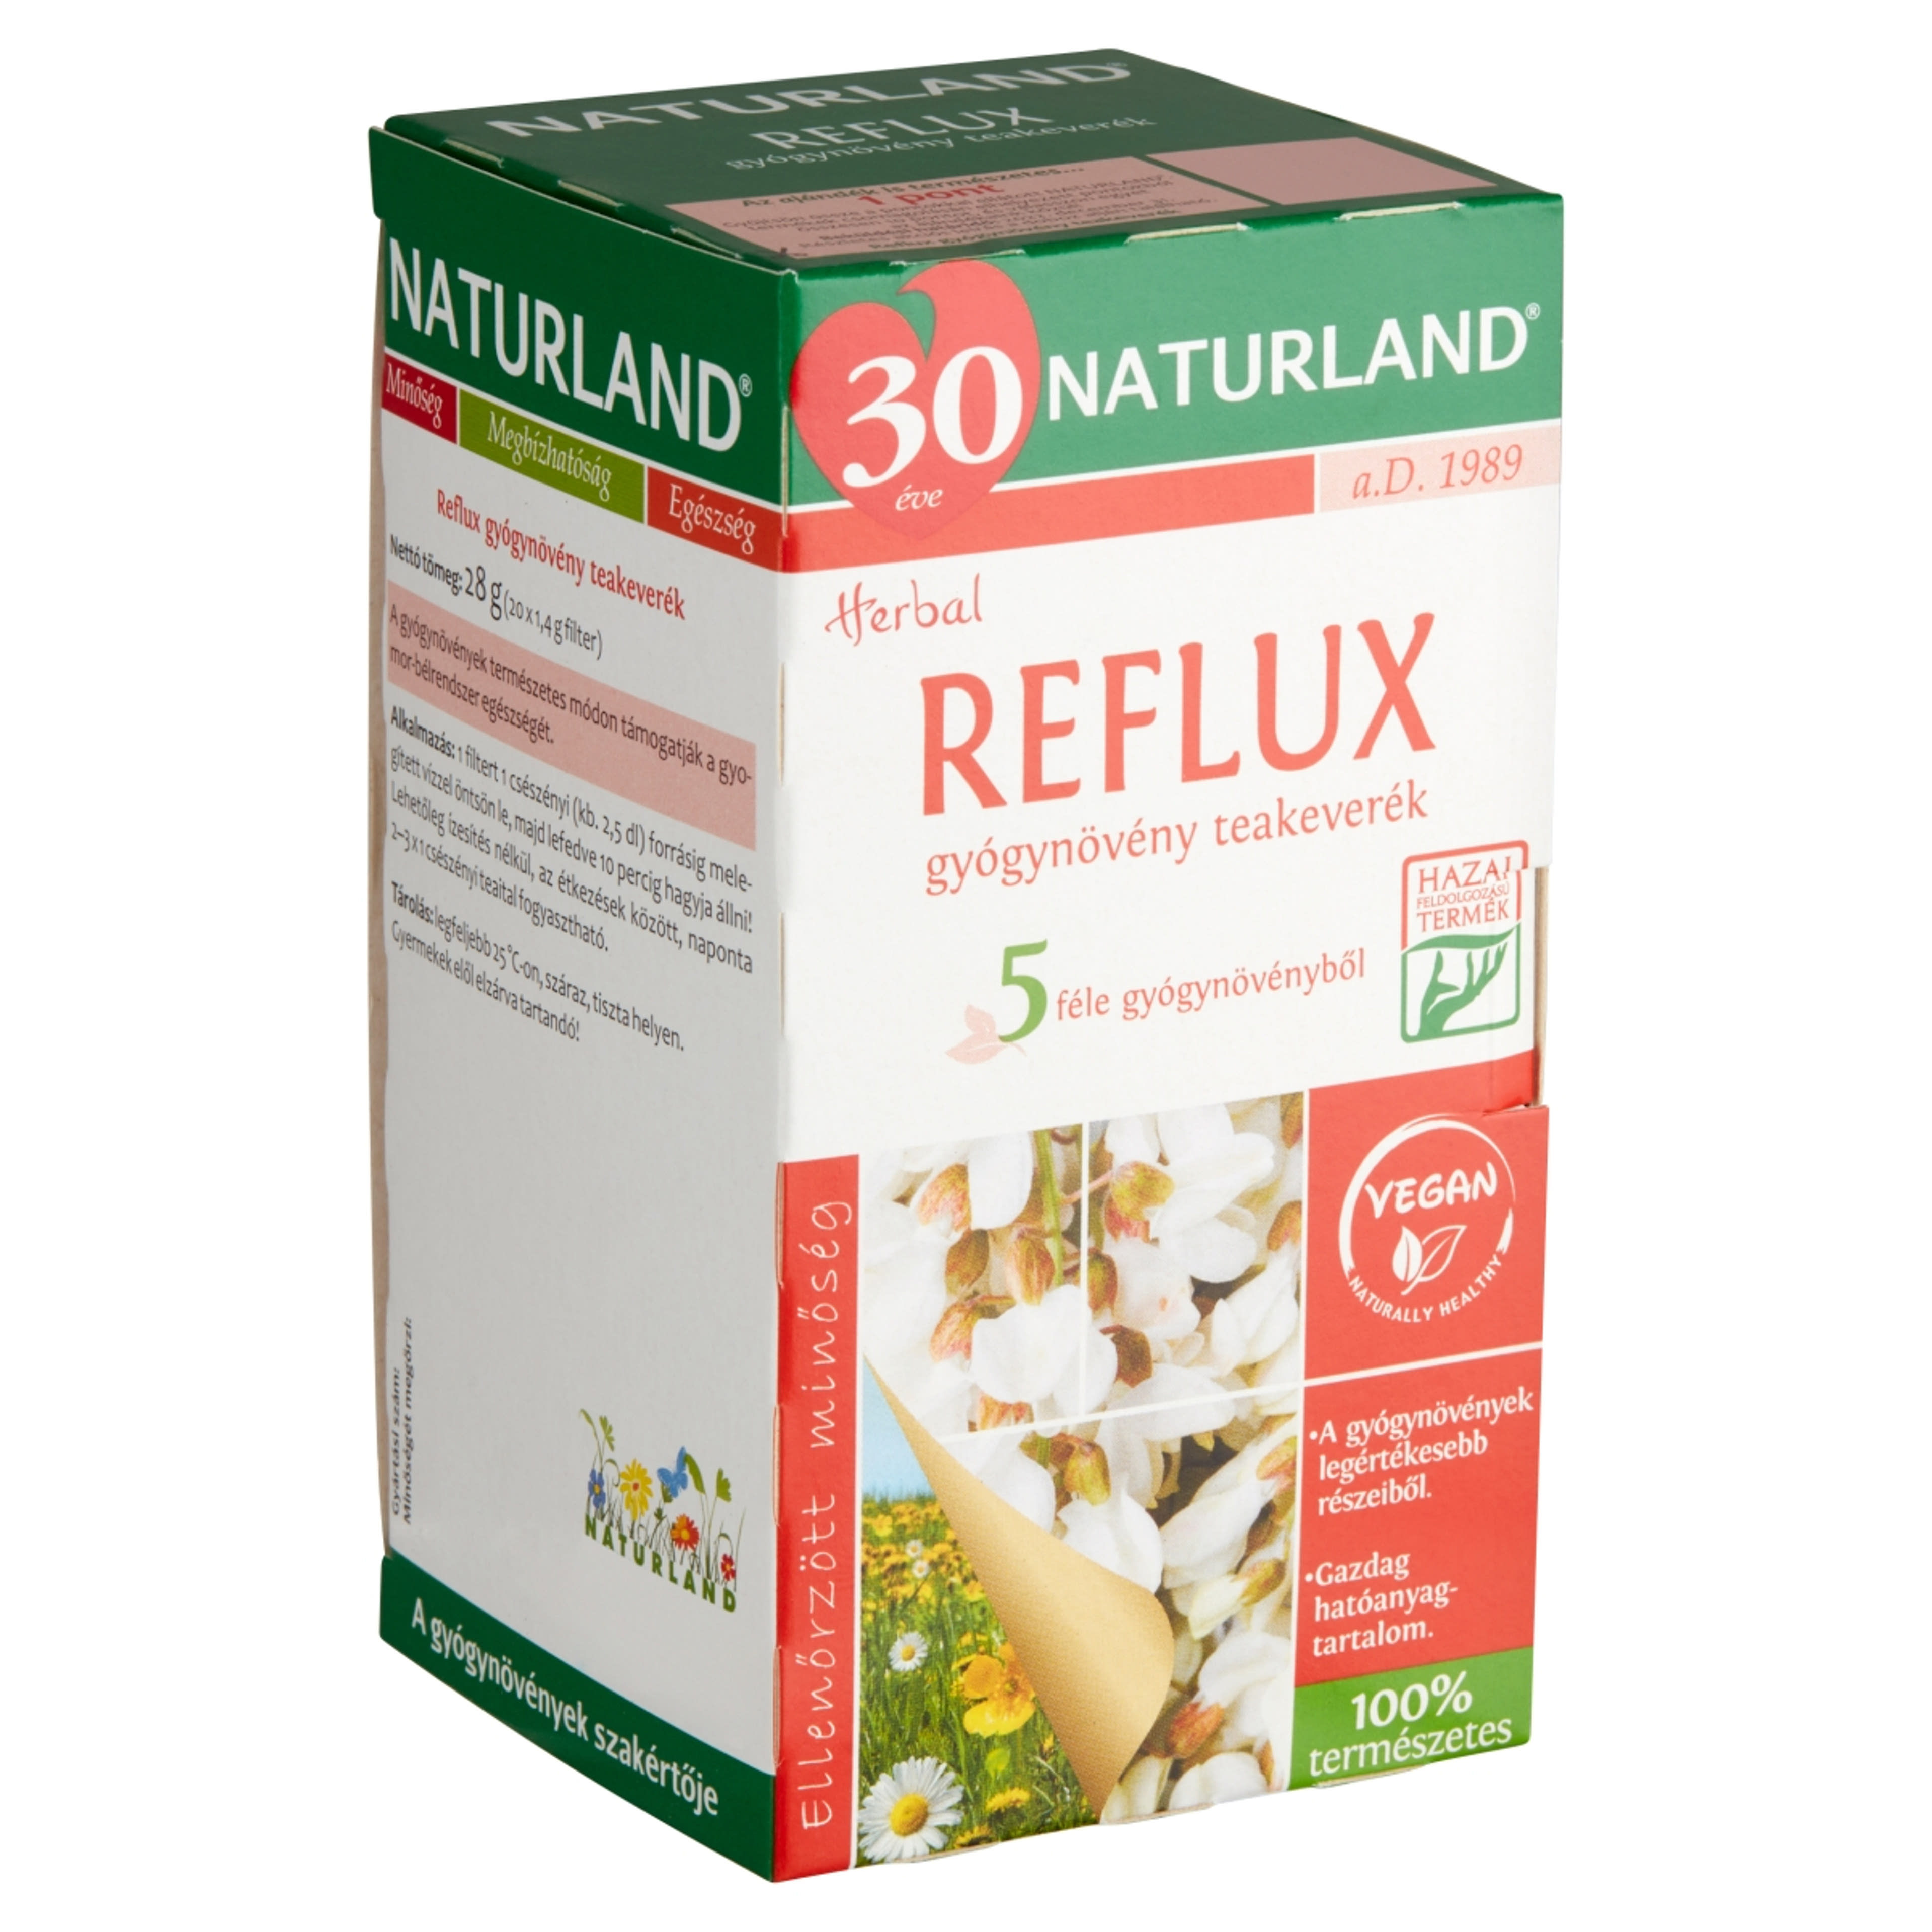 Naturland reflux tea filter - 20 db-2